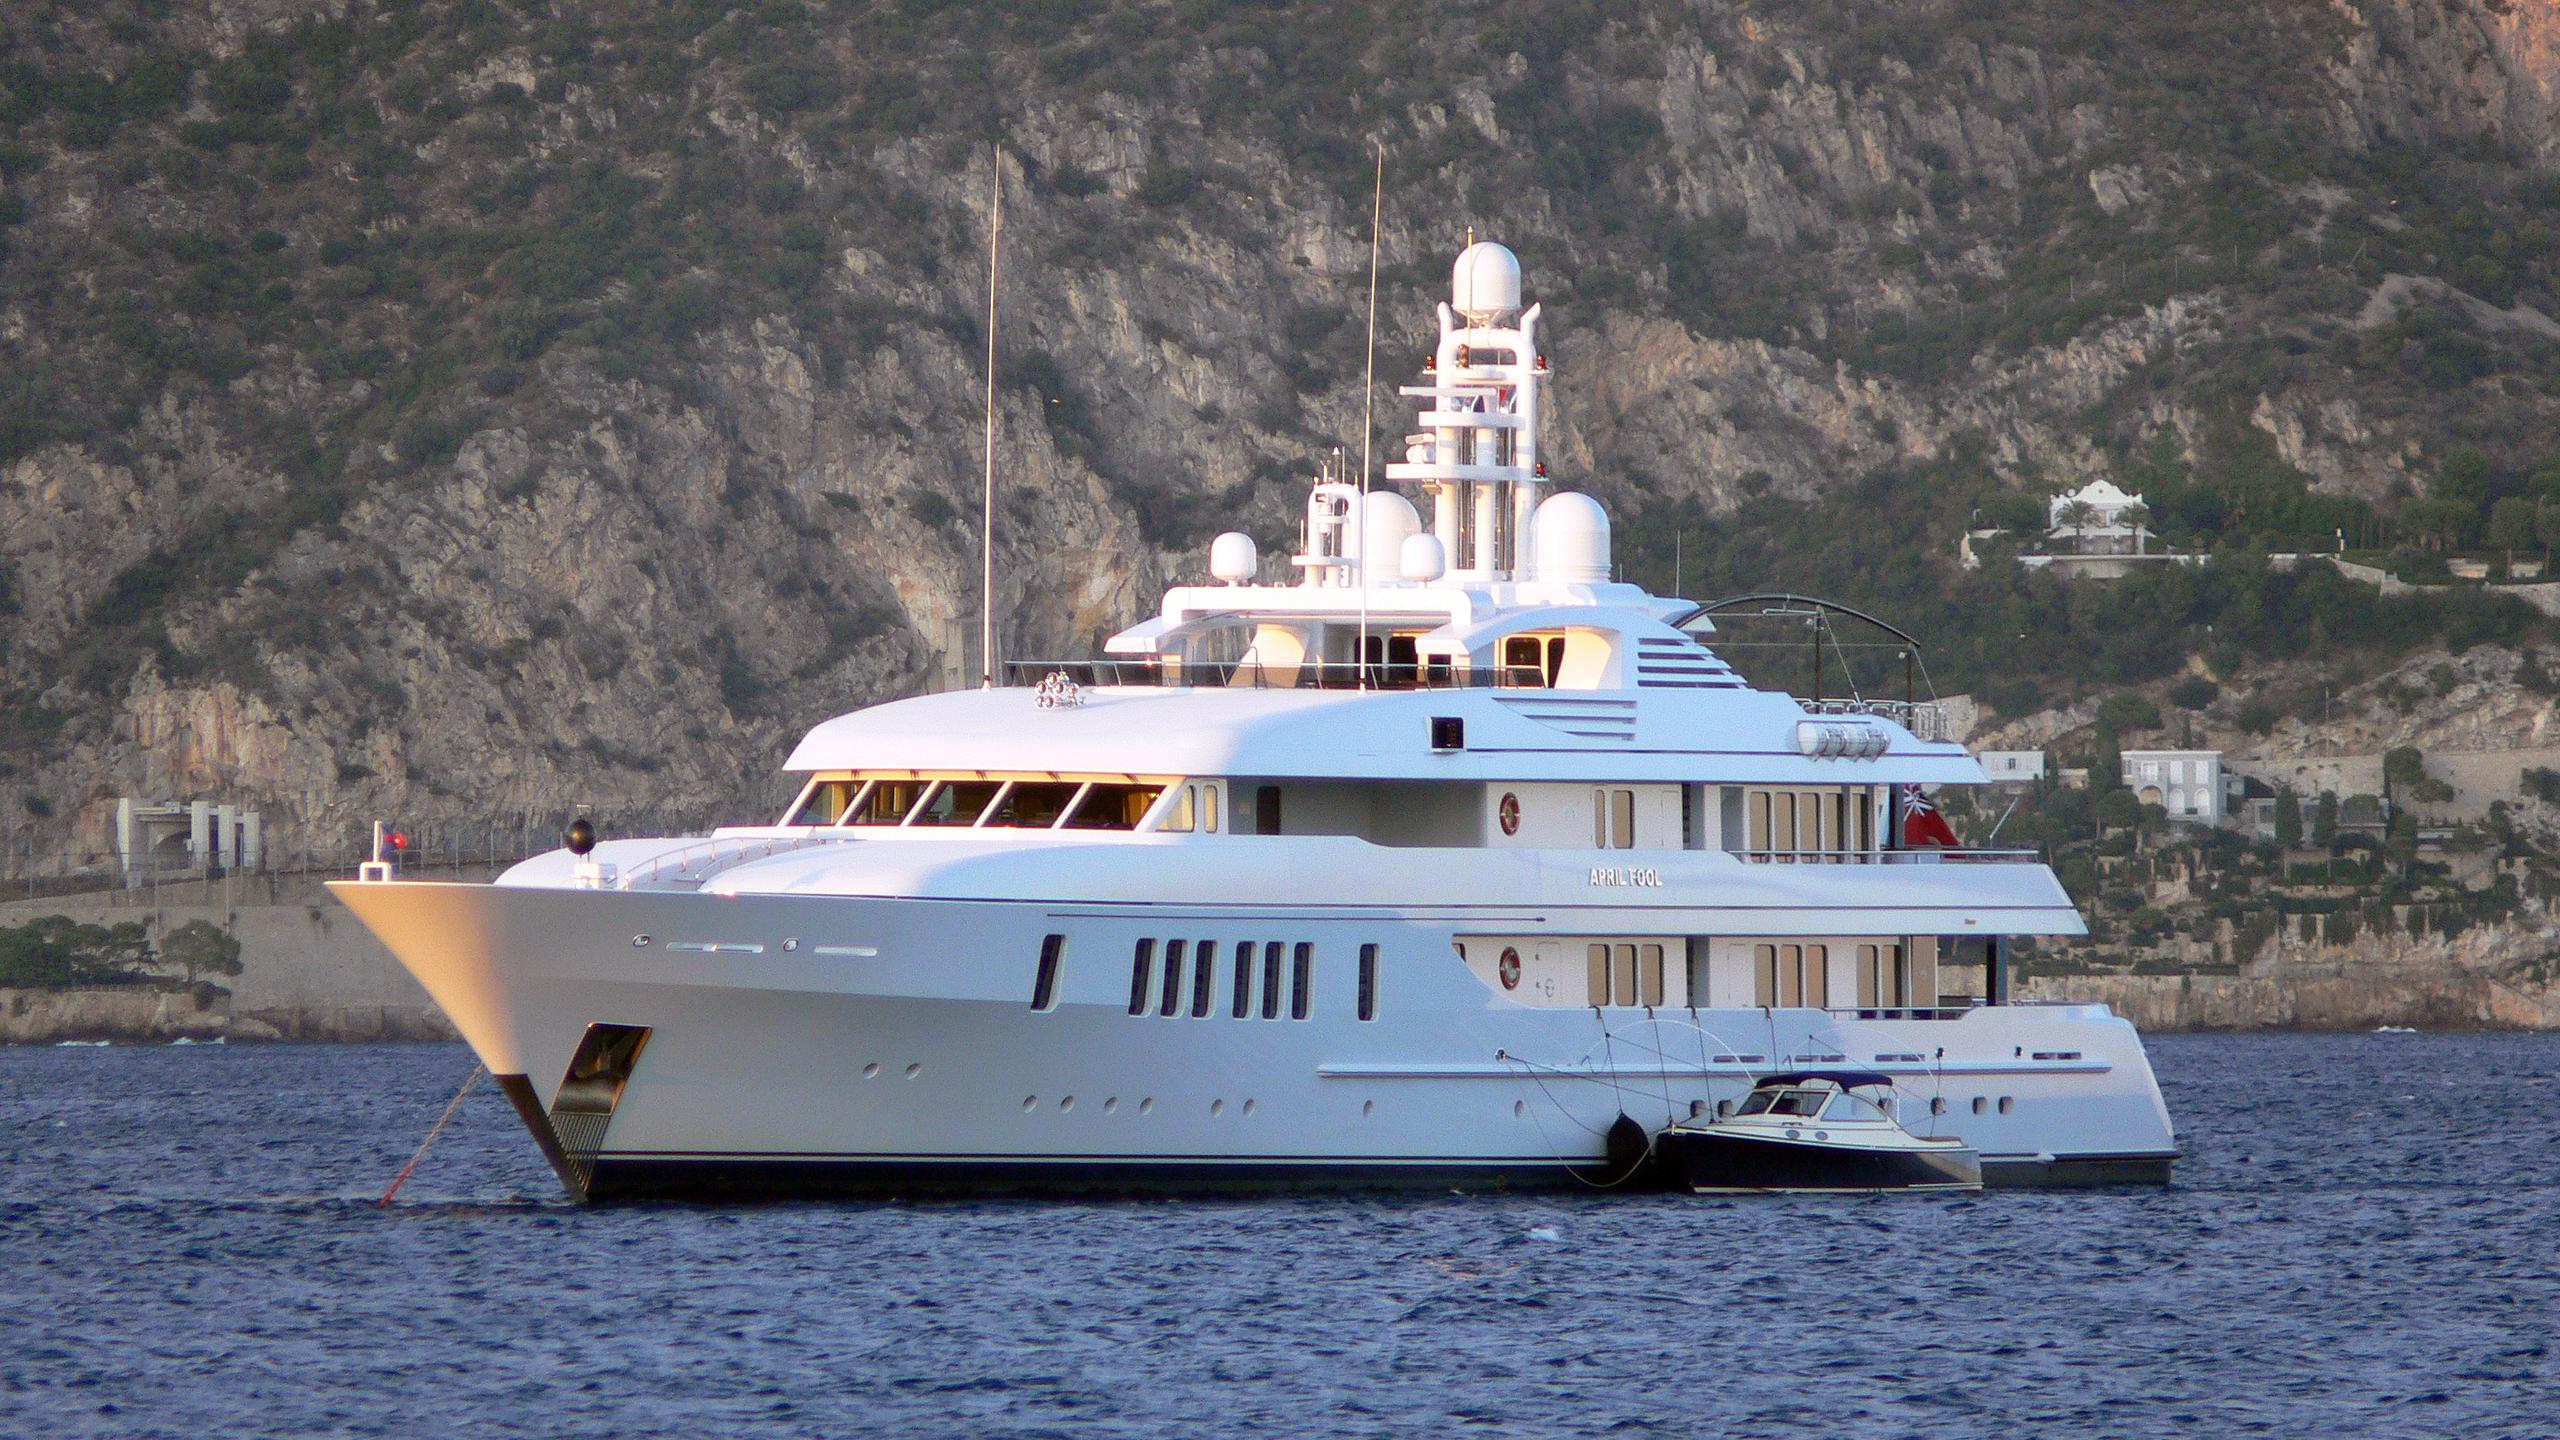 APRIL FOOL Yacht • Sanford Weill $60M Superyacht • Feadship • 2006